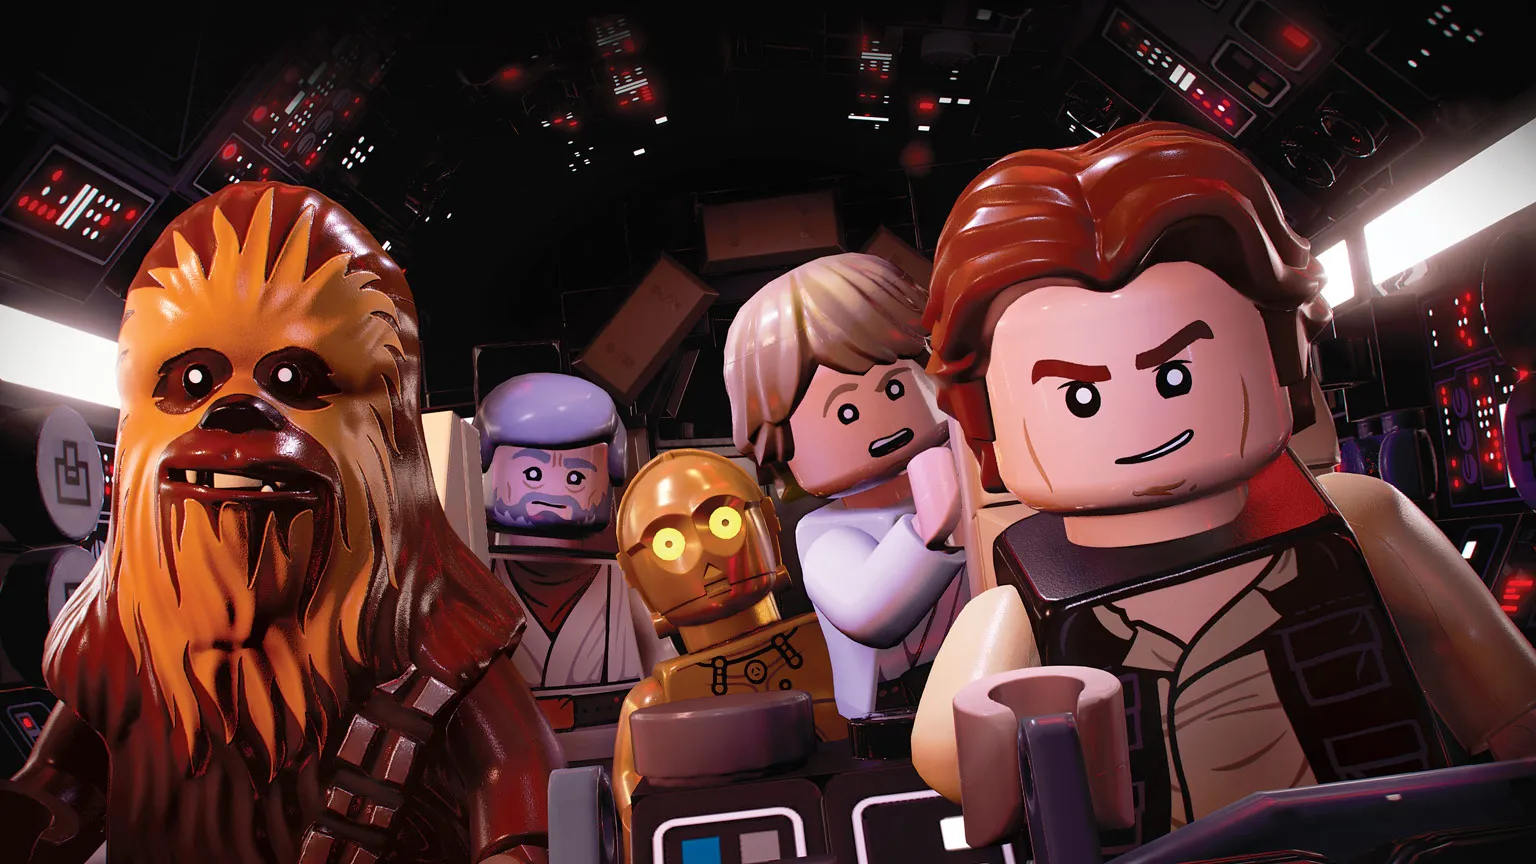 LEGO Star Wars: The Skywalker Saga - First Reviews w/ Metacritic